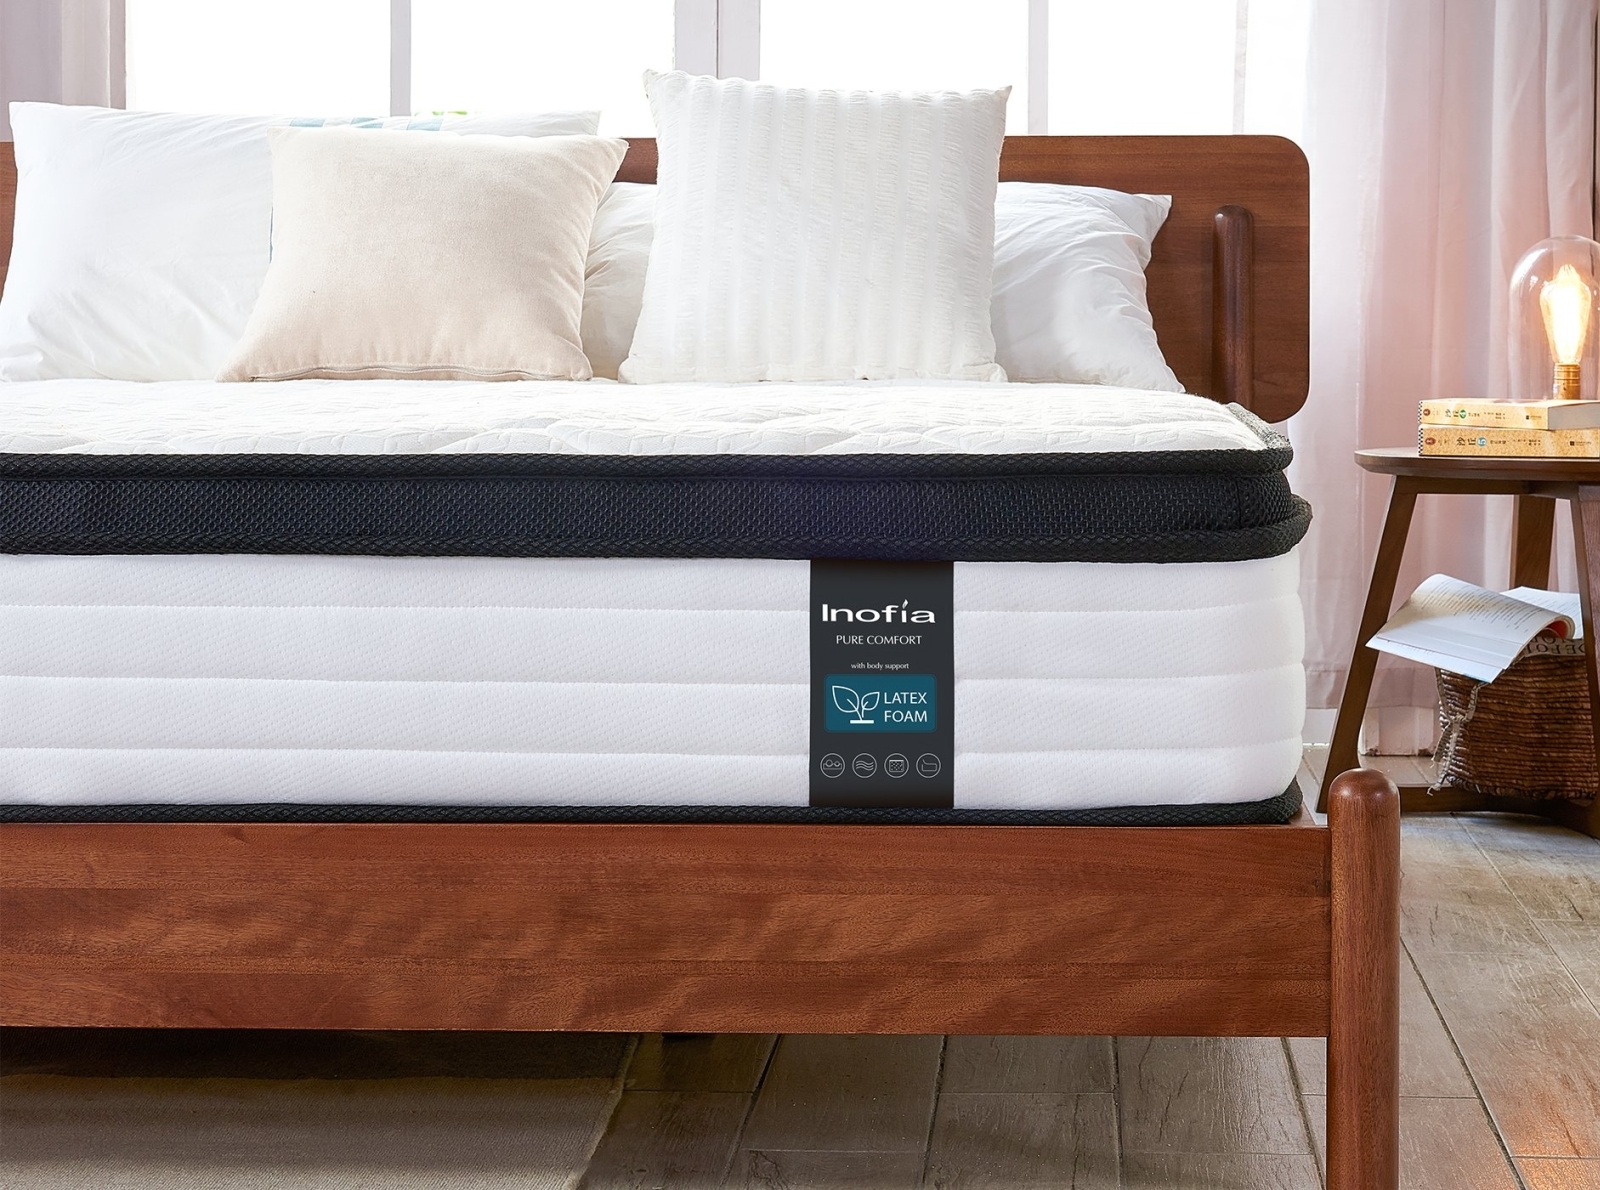 inofia double memory foam mattress 11.4 inch